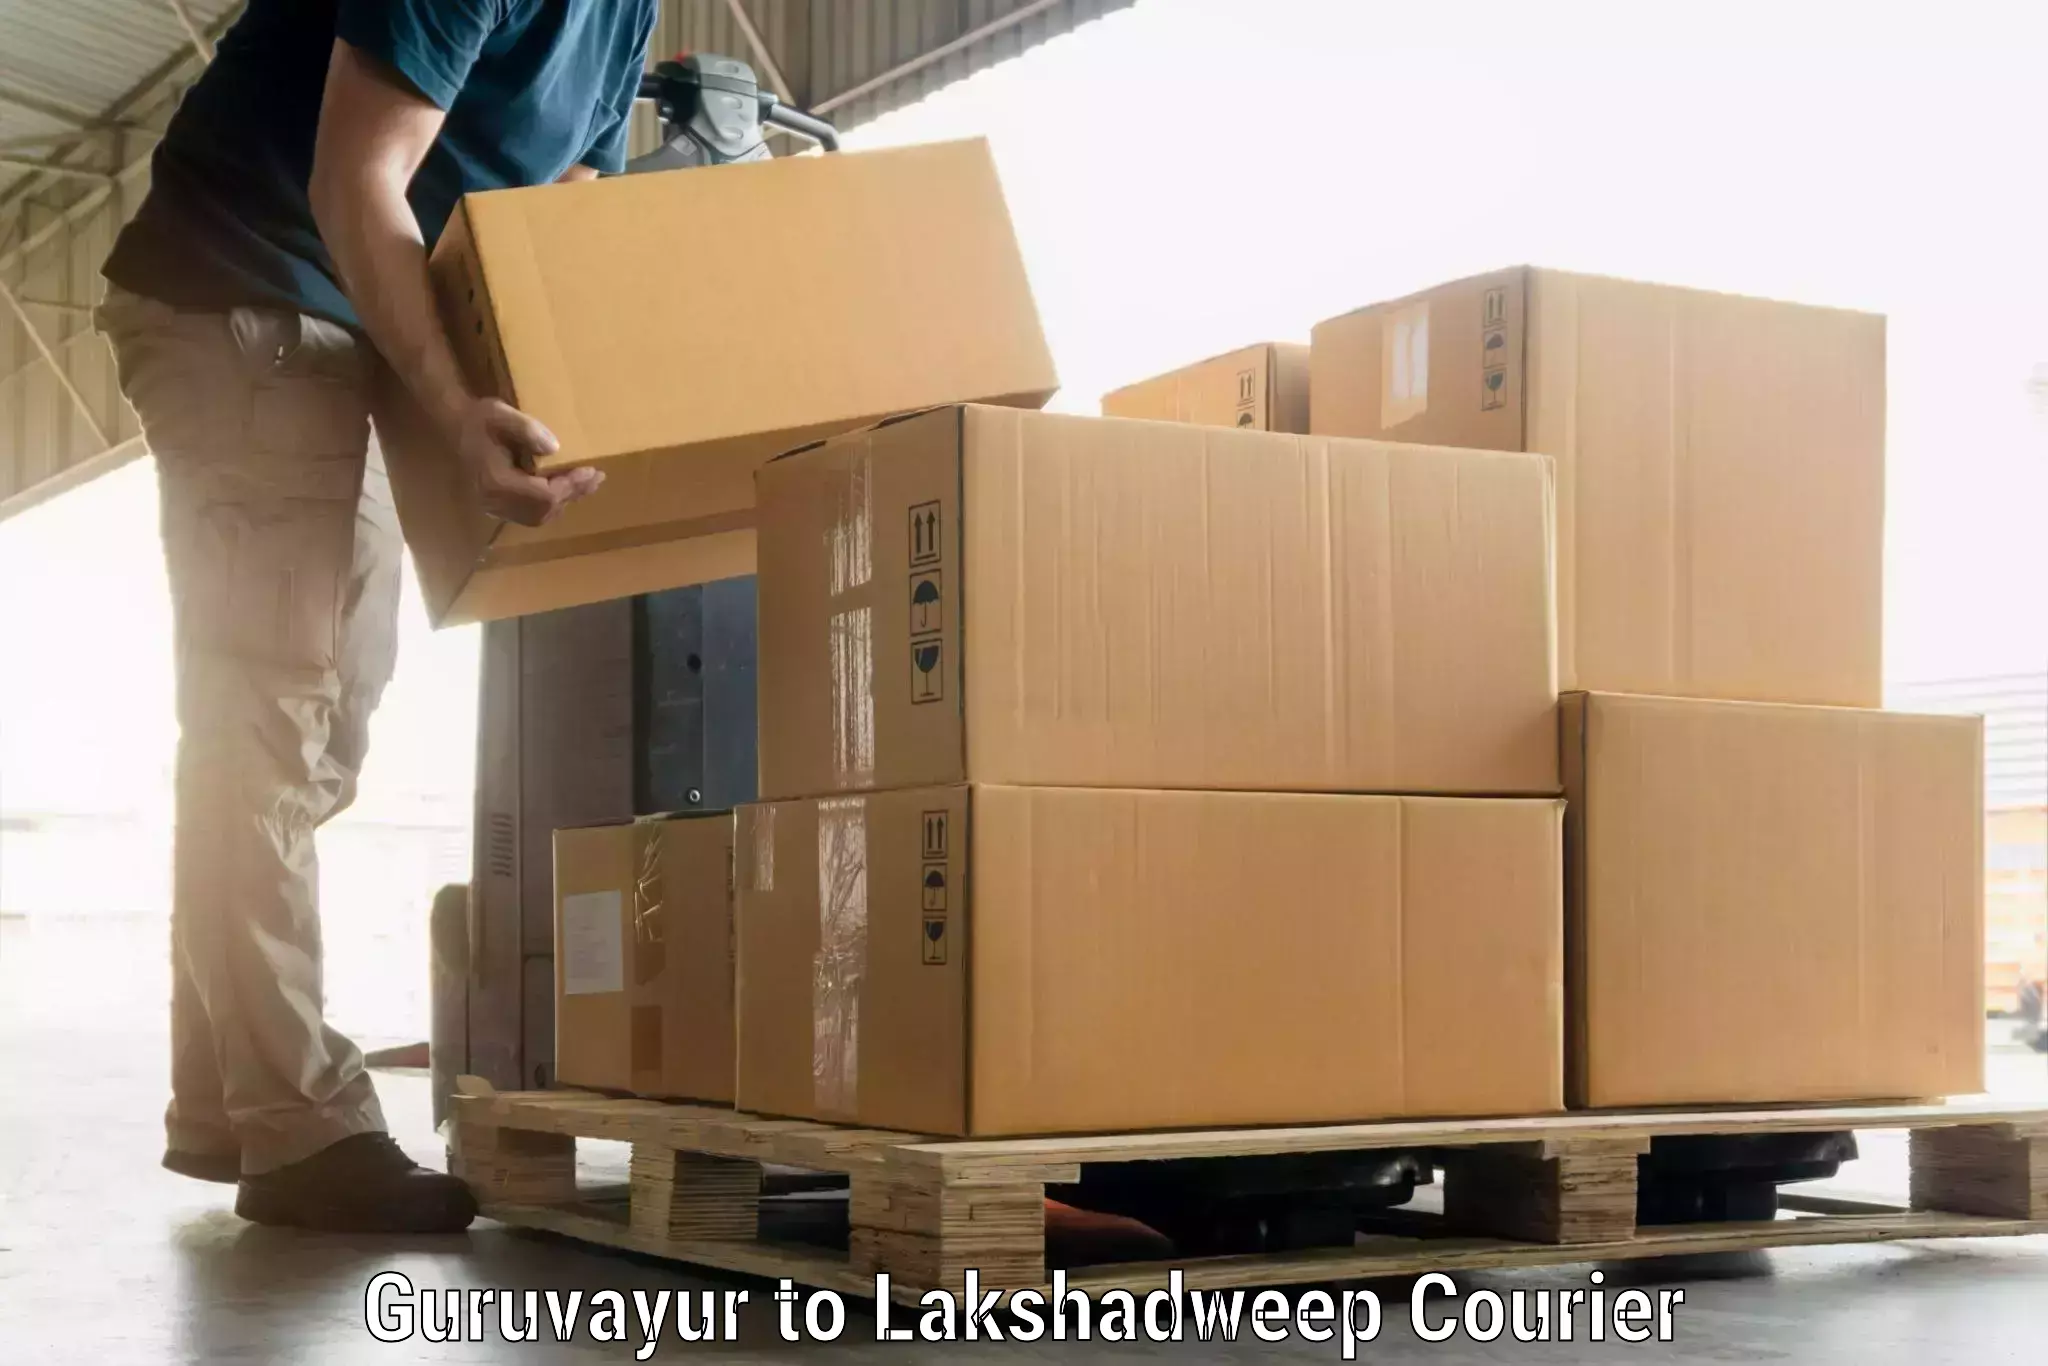 Luggage transport consultancy Guruvayur to Lakshadweep